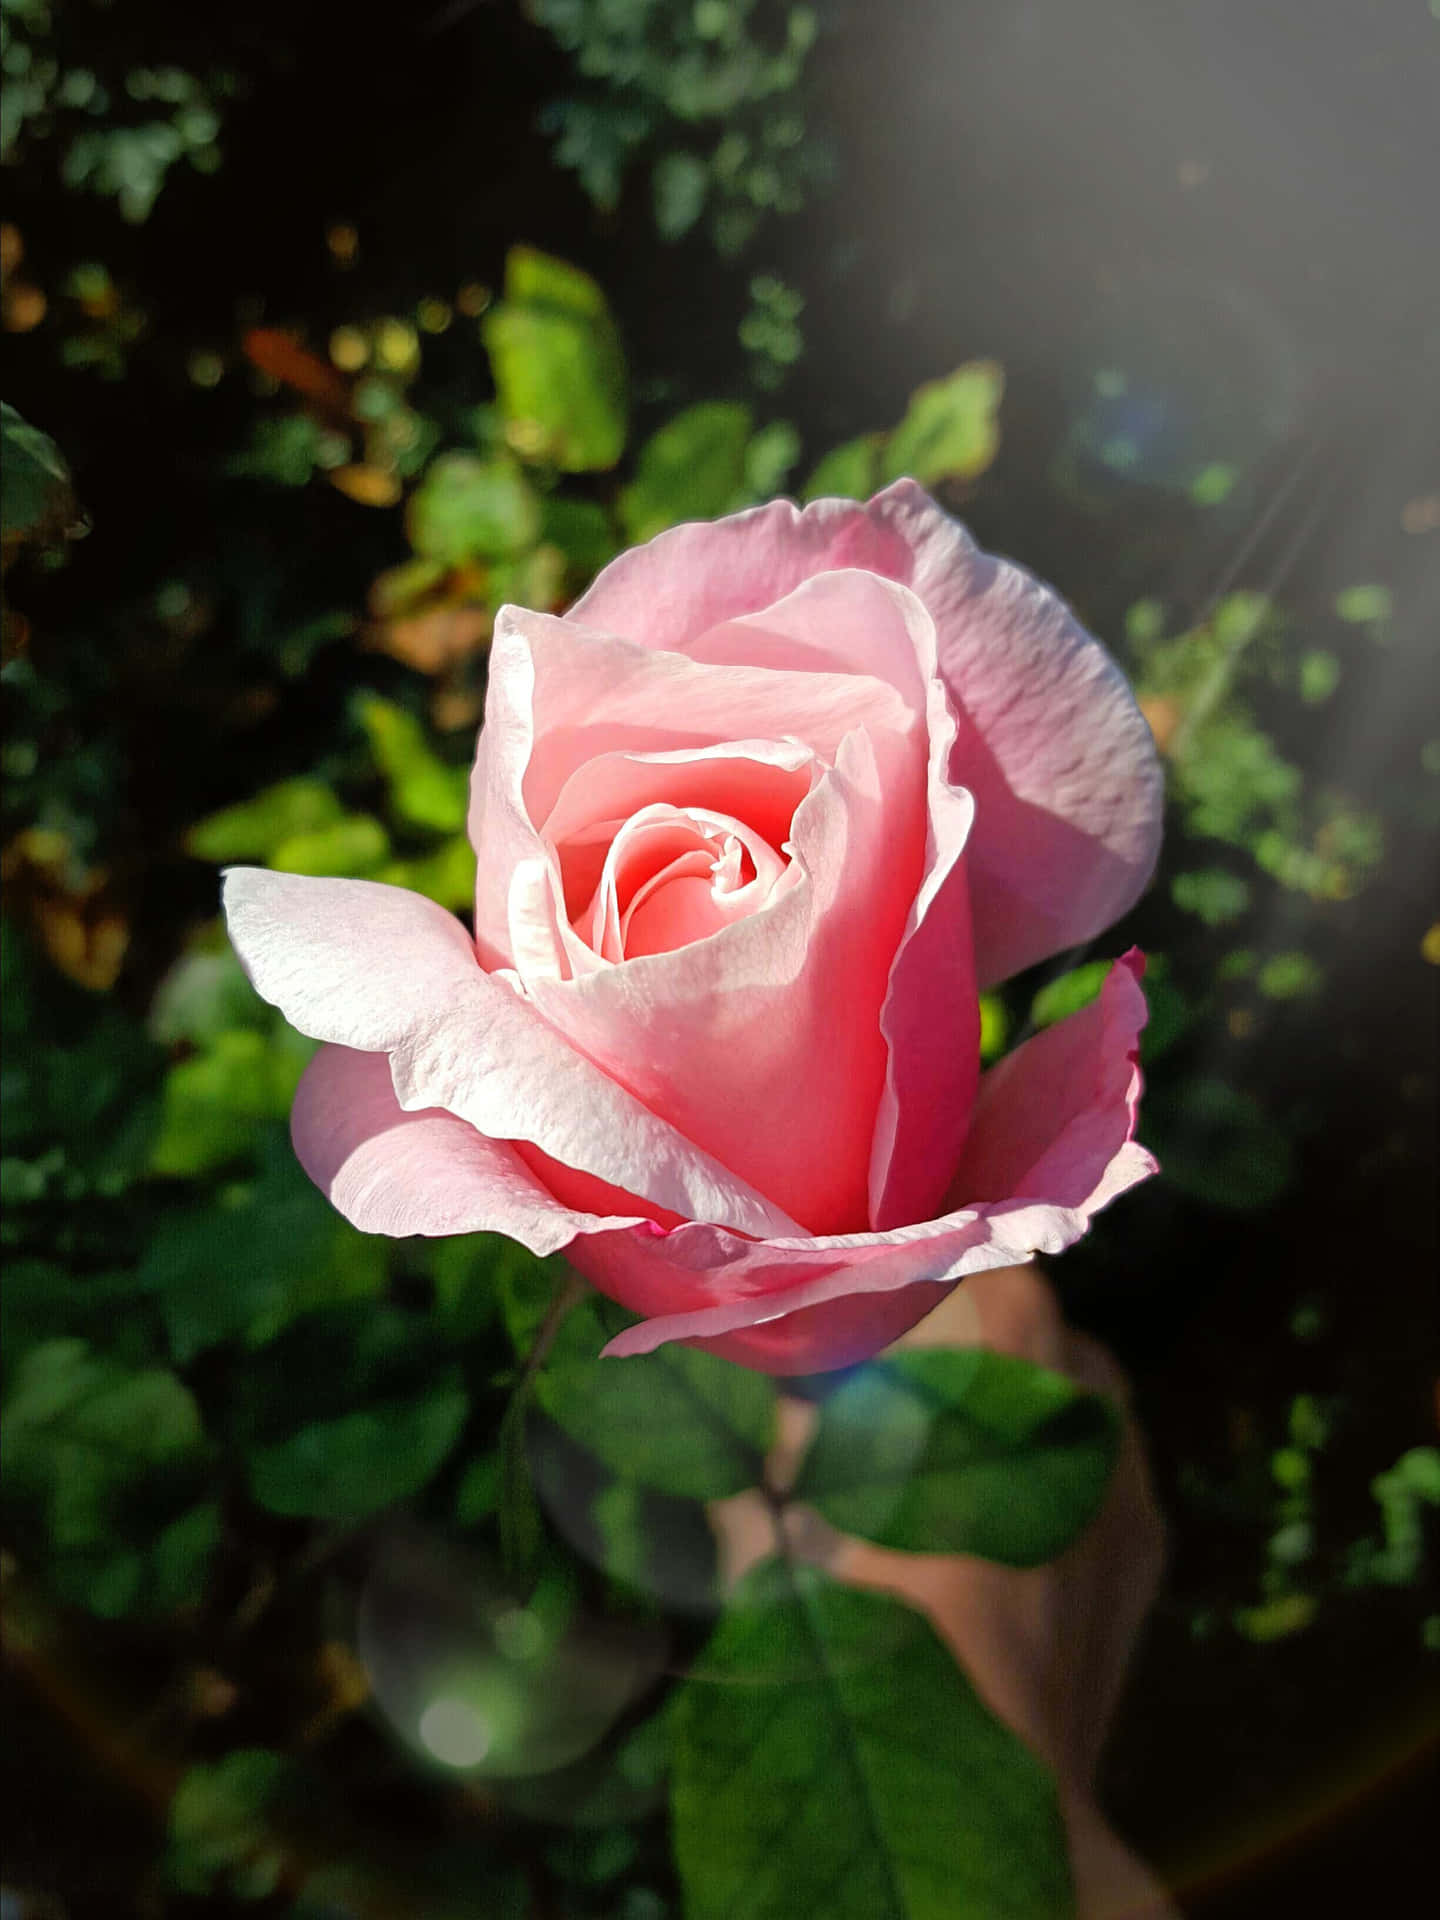 A Beautiful Rose in Full Bloom